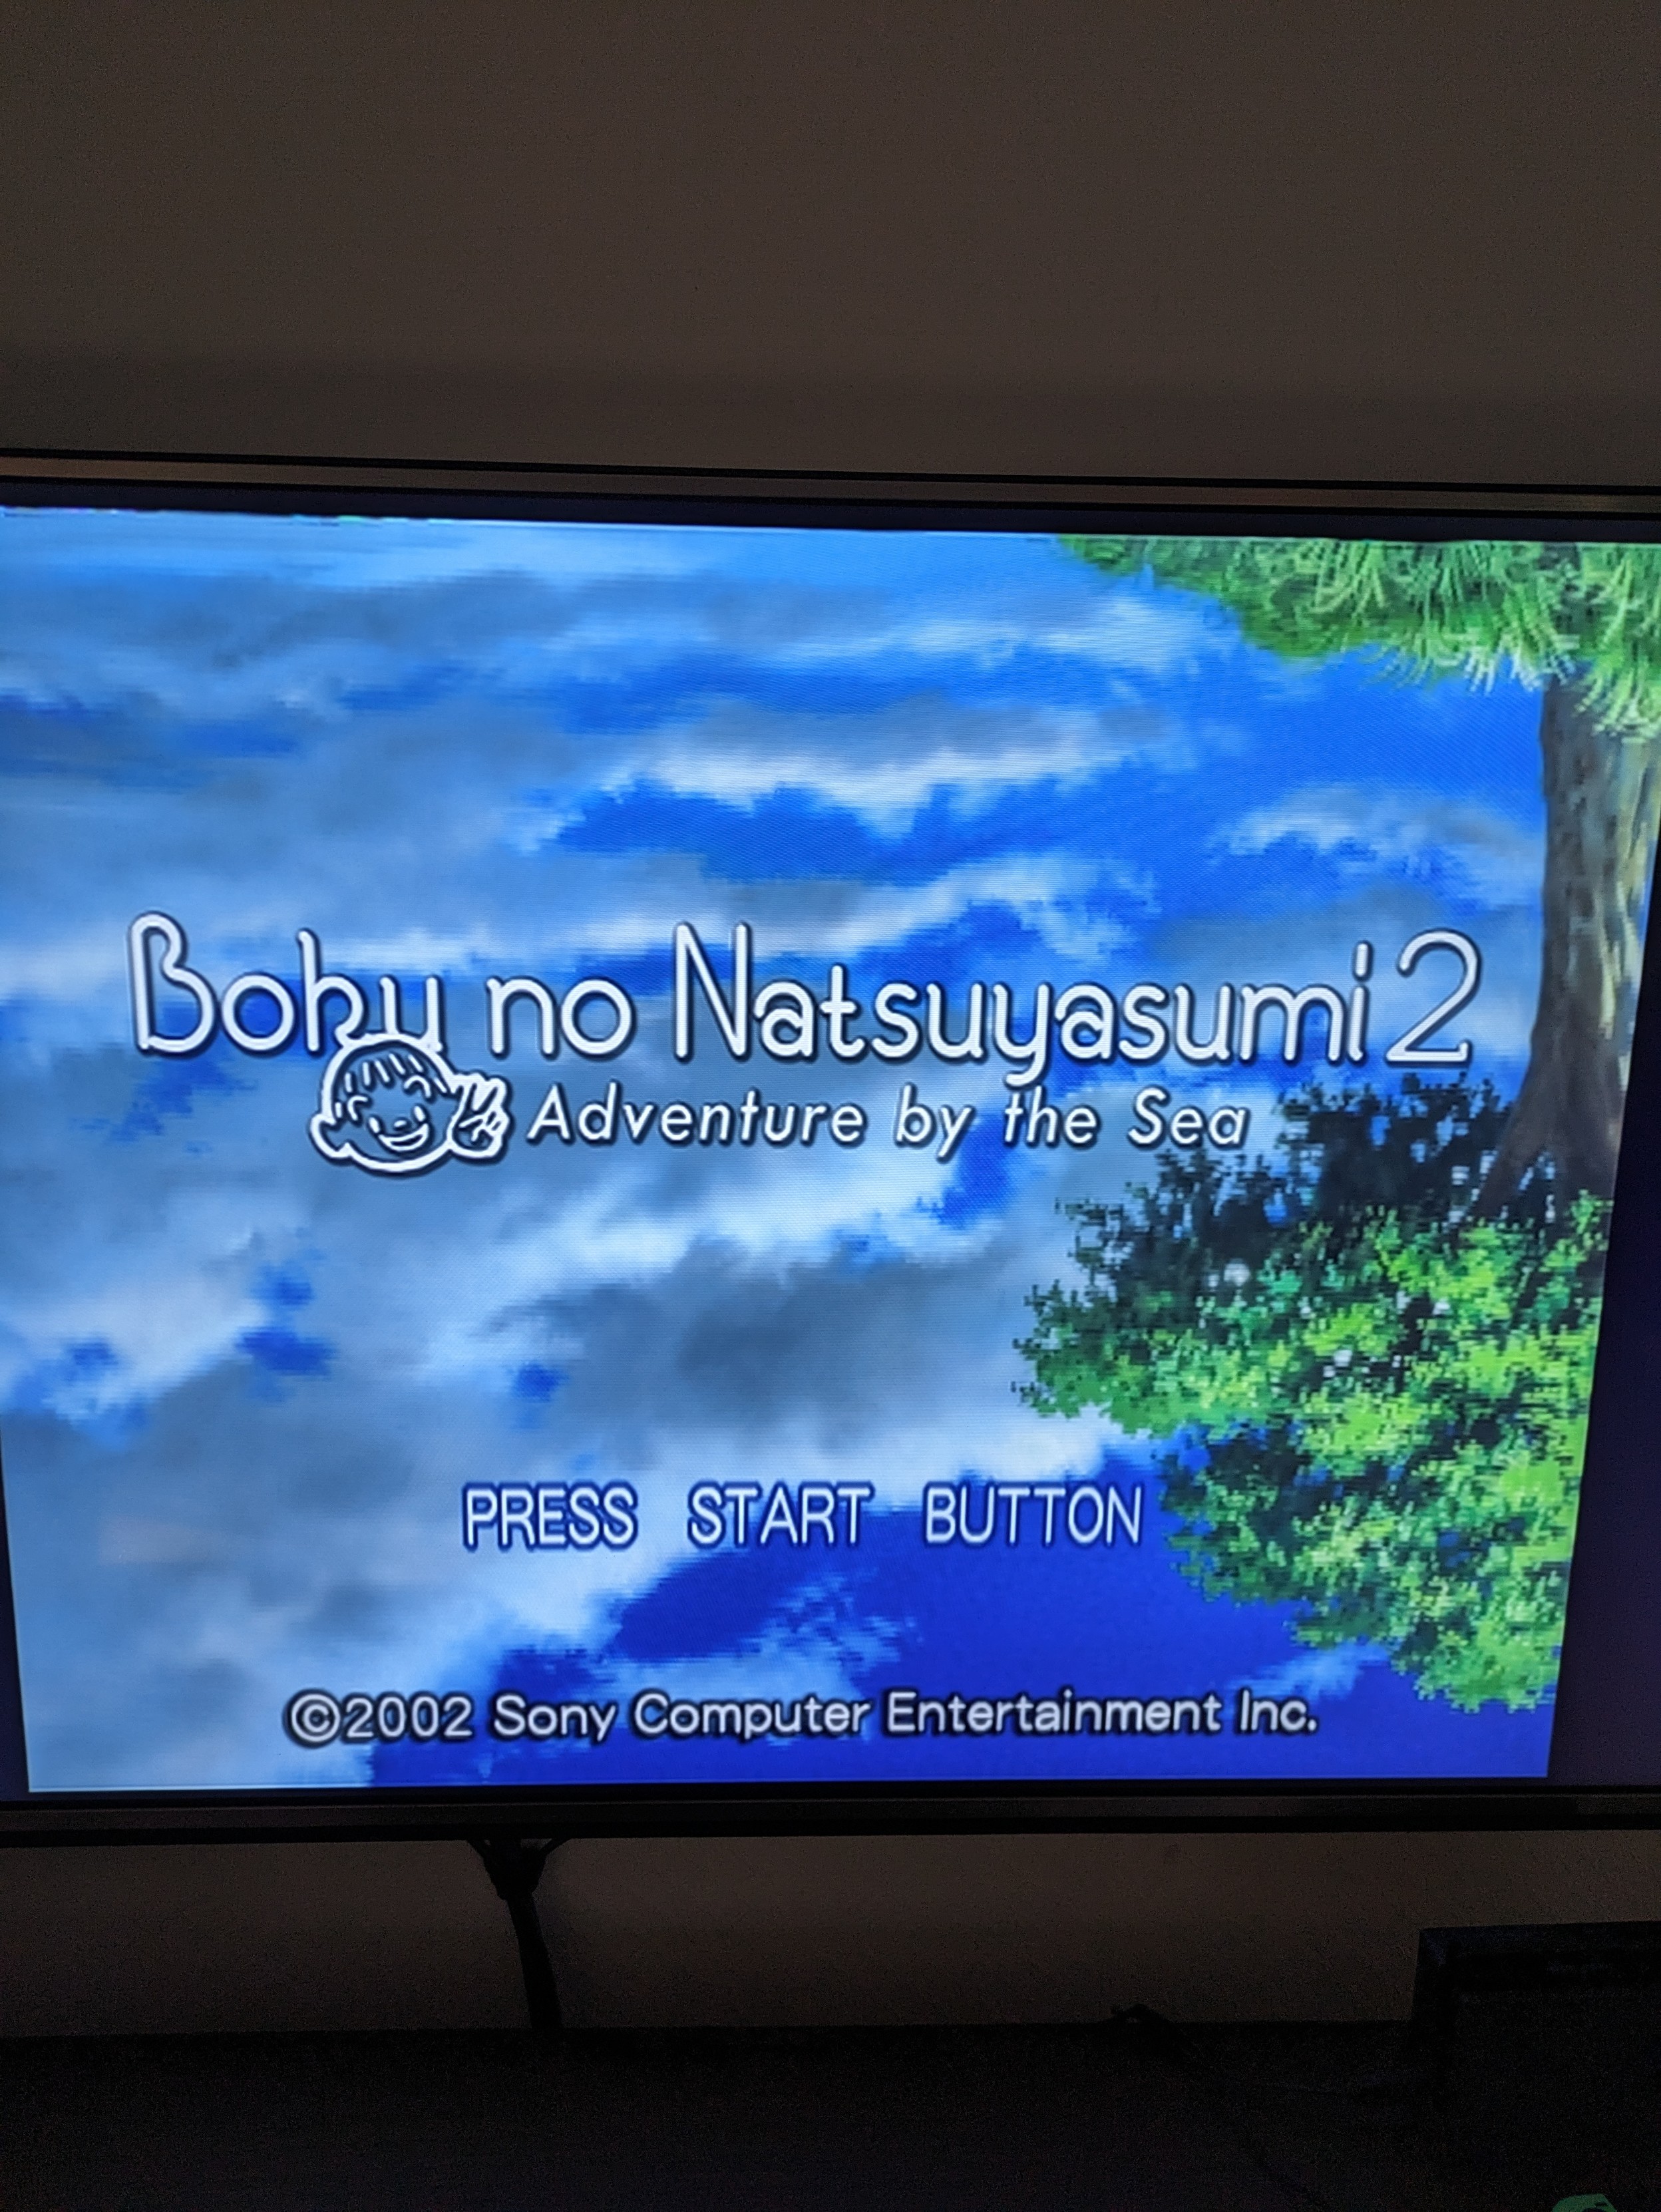 Boku no Natsuyasumi 2’s title screen showing English text